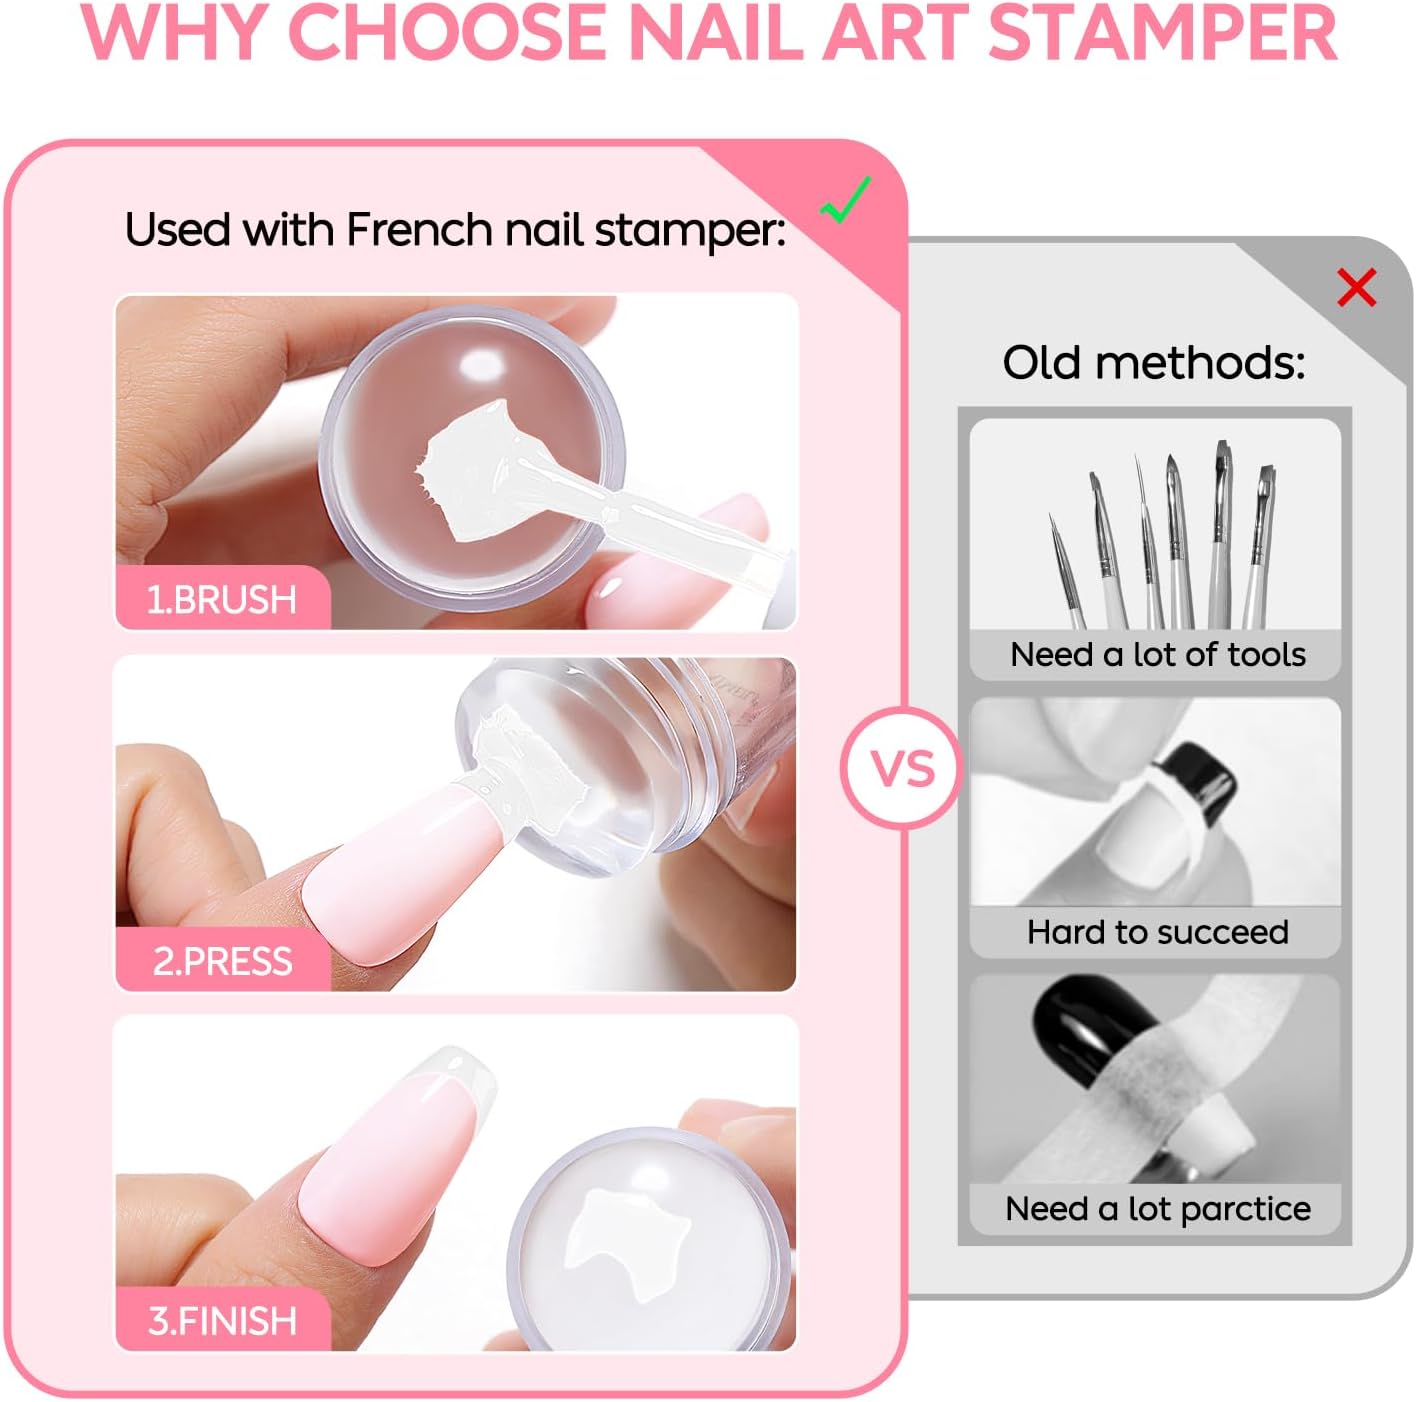 Why choose nail art stamper